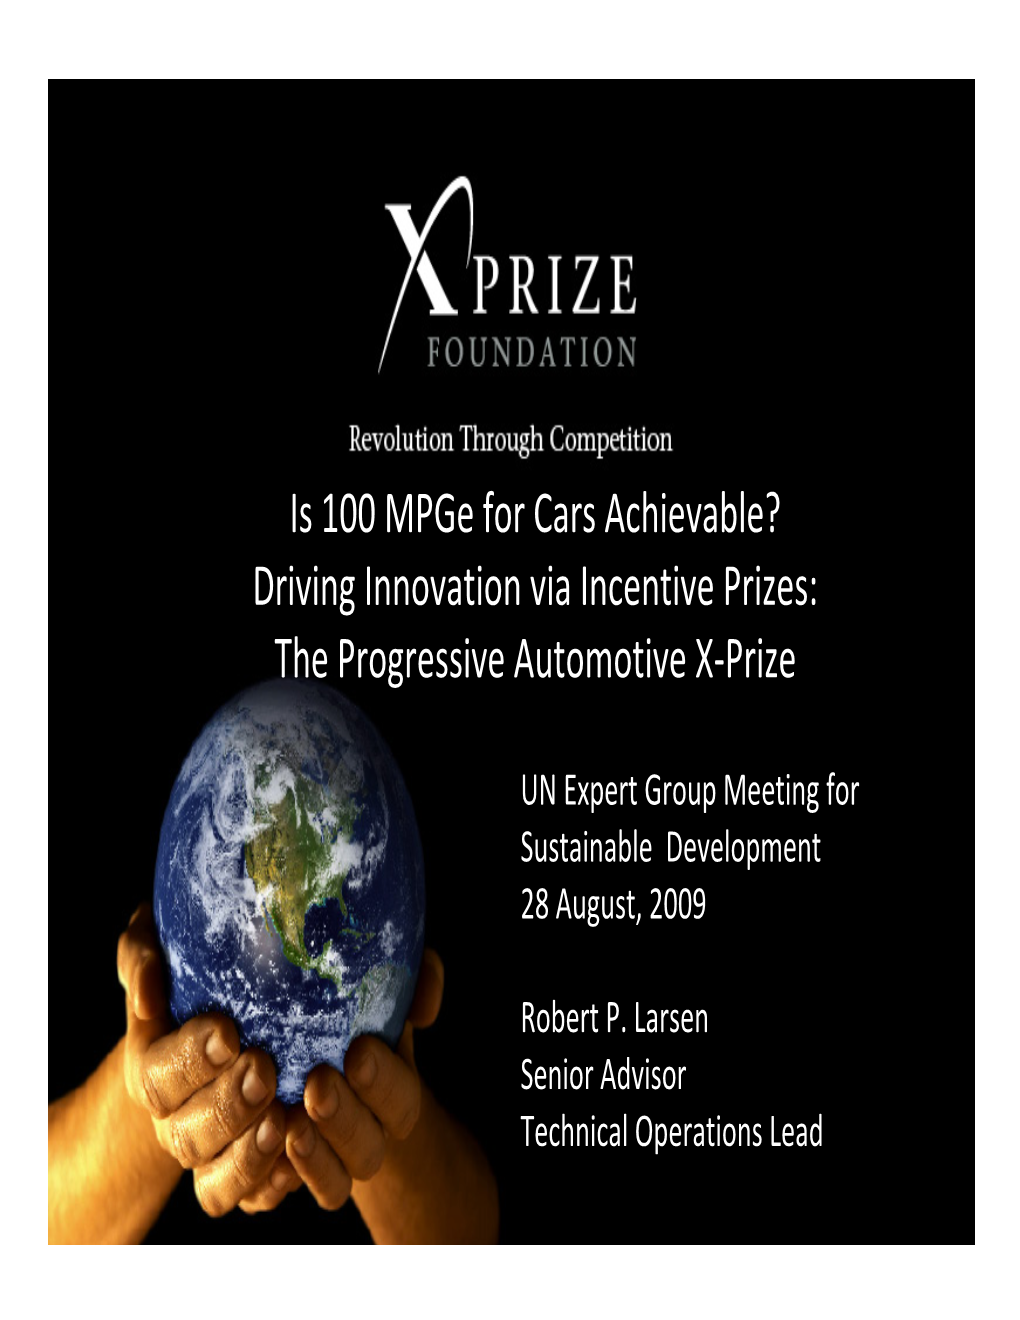 The Progressive Automotive X-Prize